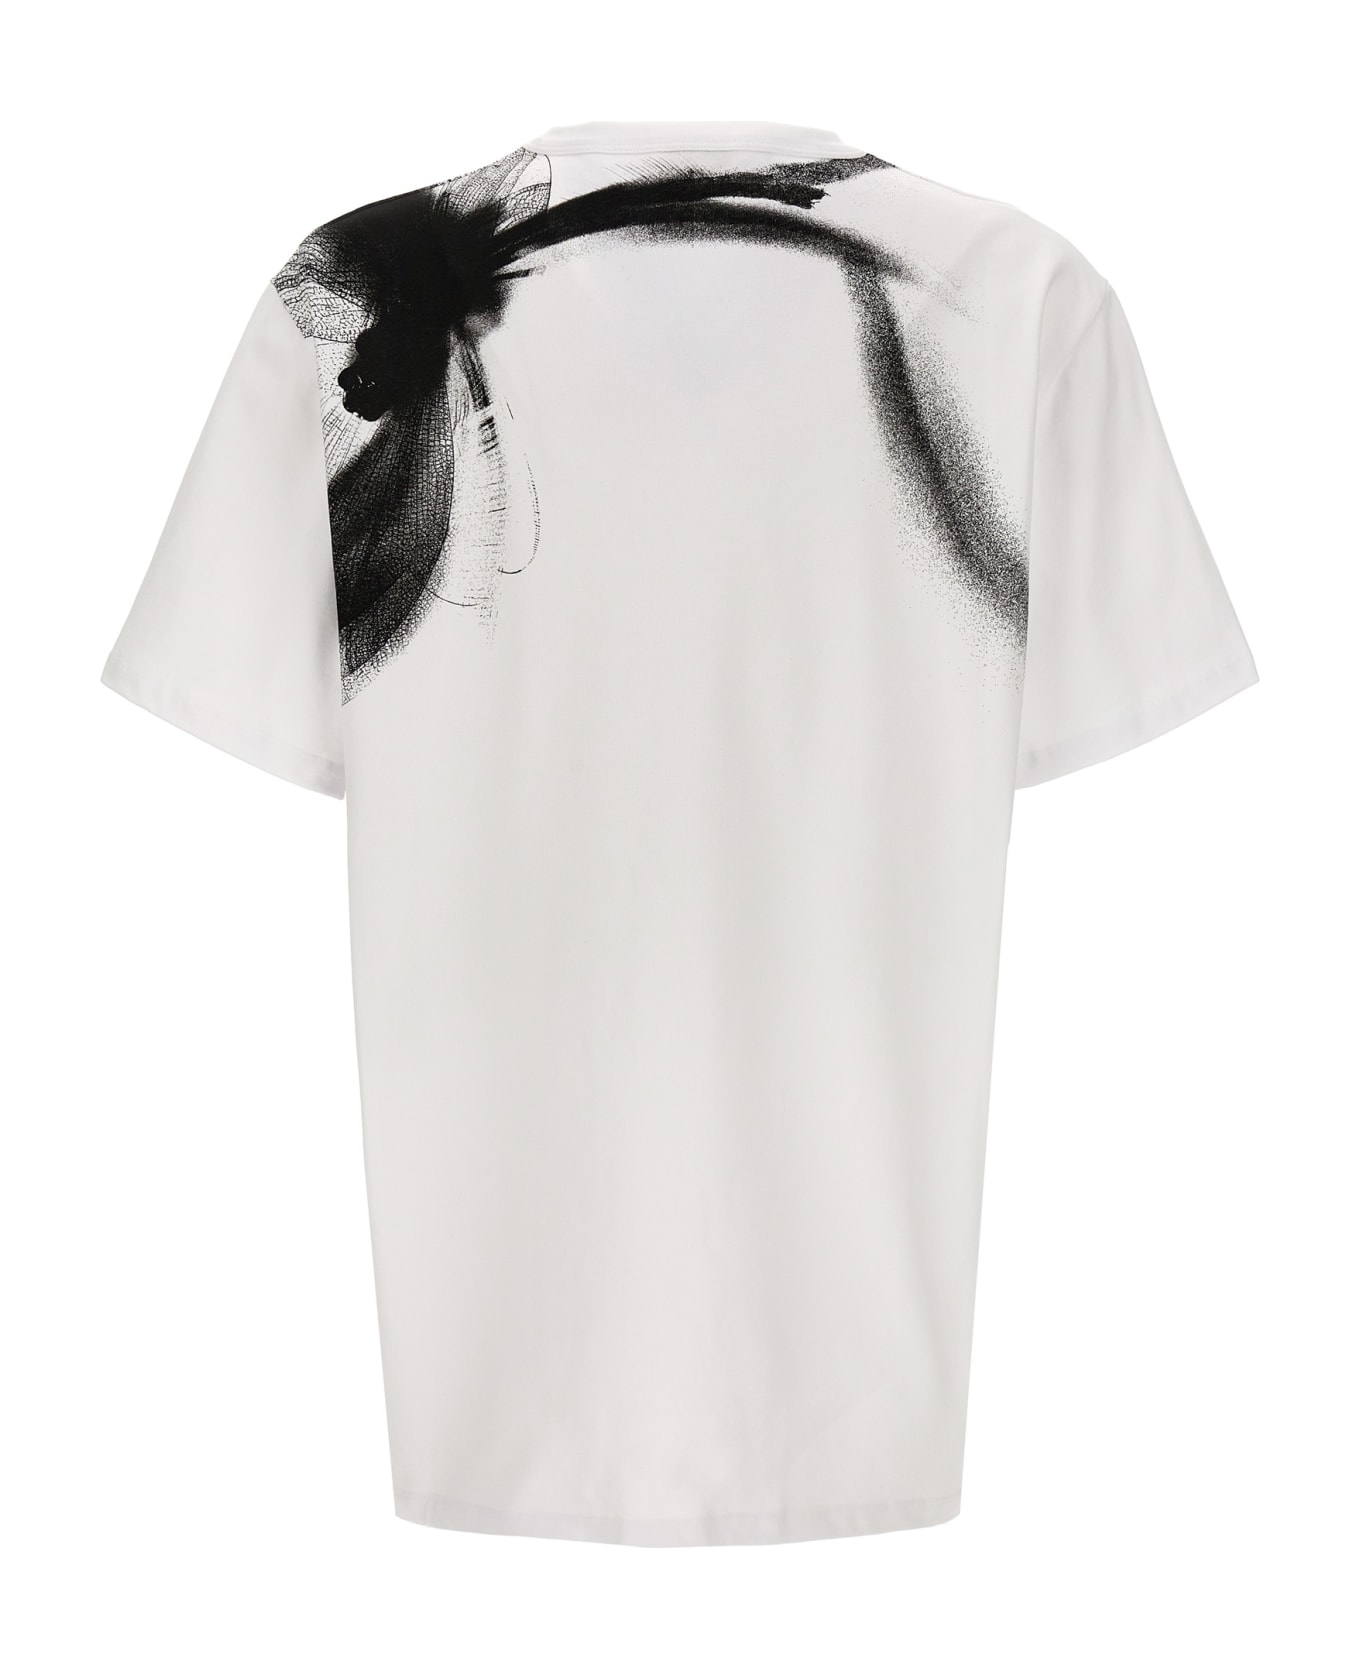 Alexander McQueen Contrast Print T-shirt - White/Black